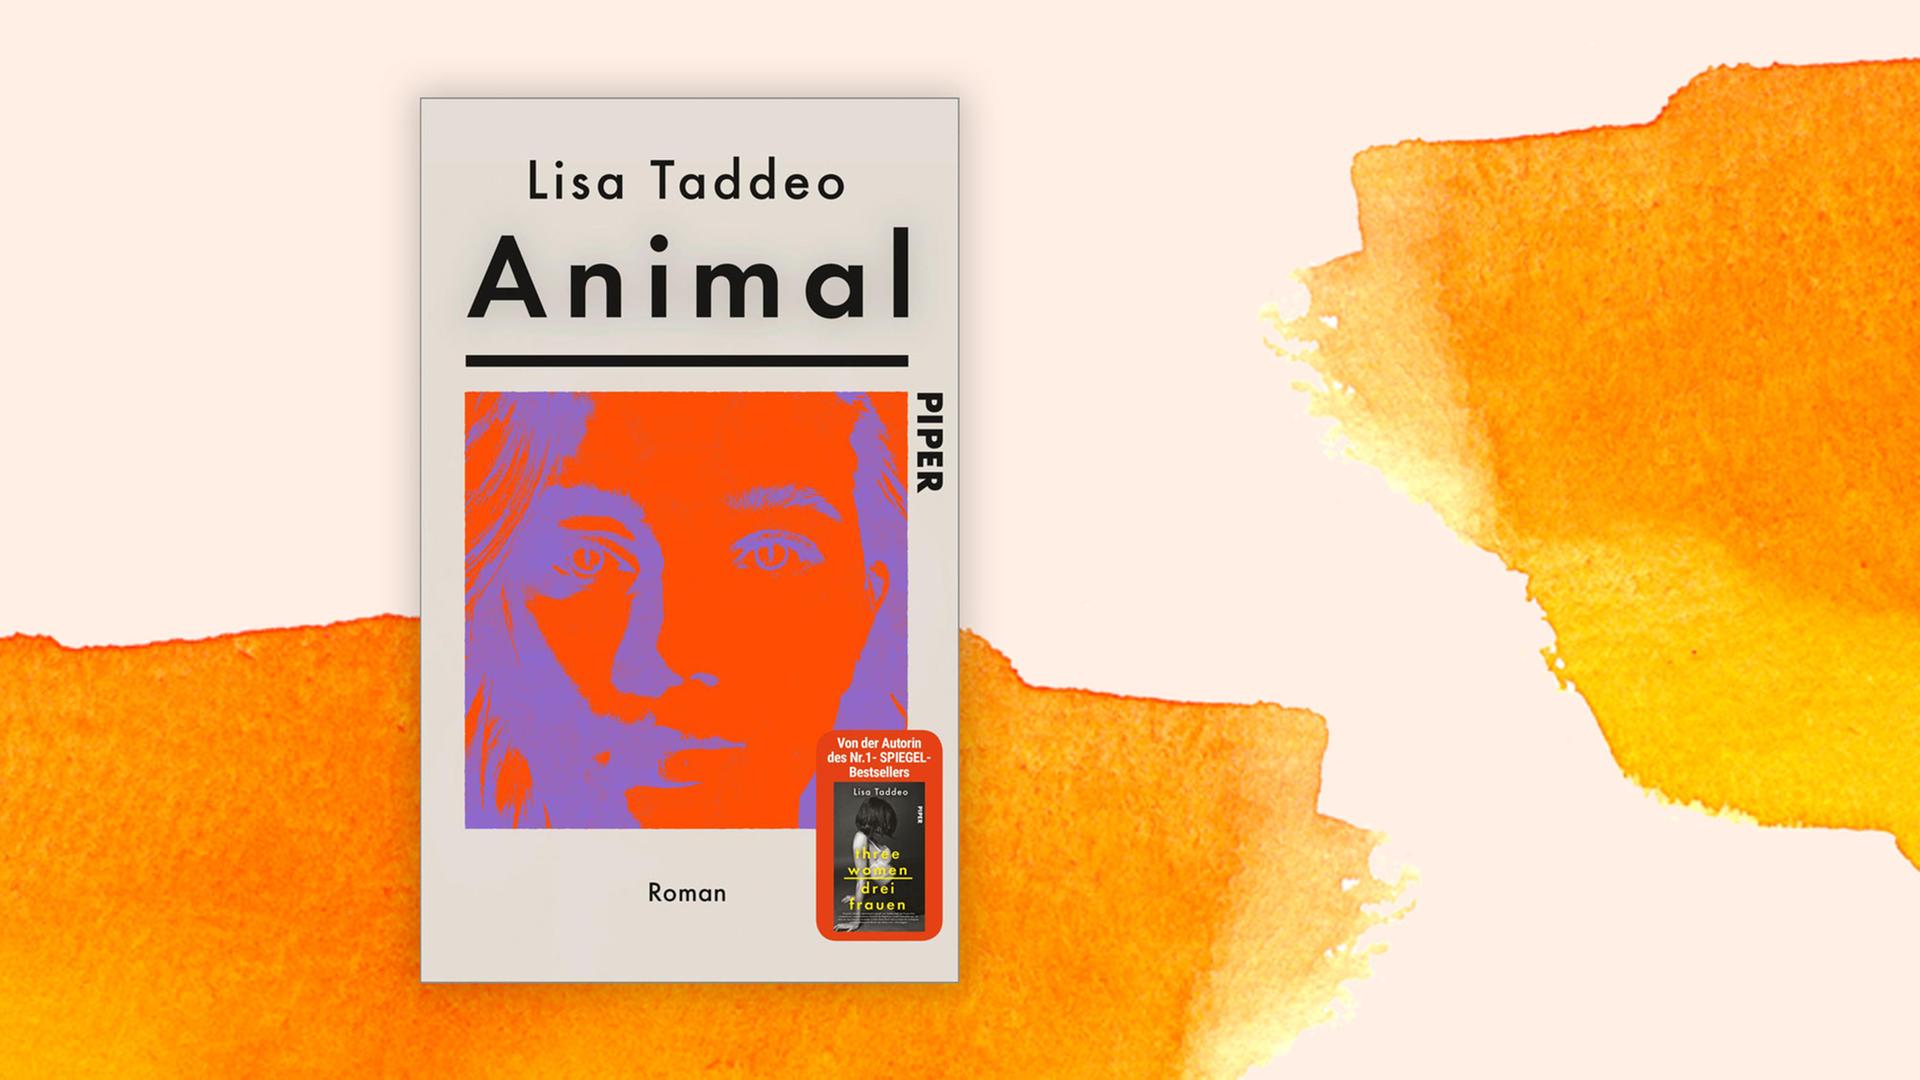 Buchcover zu Lisa Taddeo: "Animal"